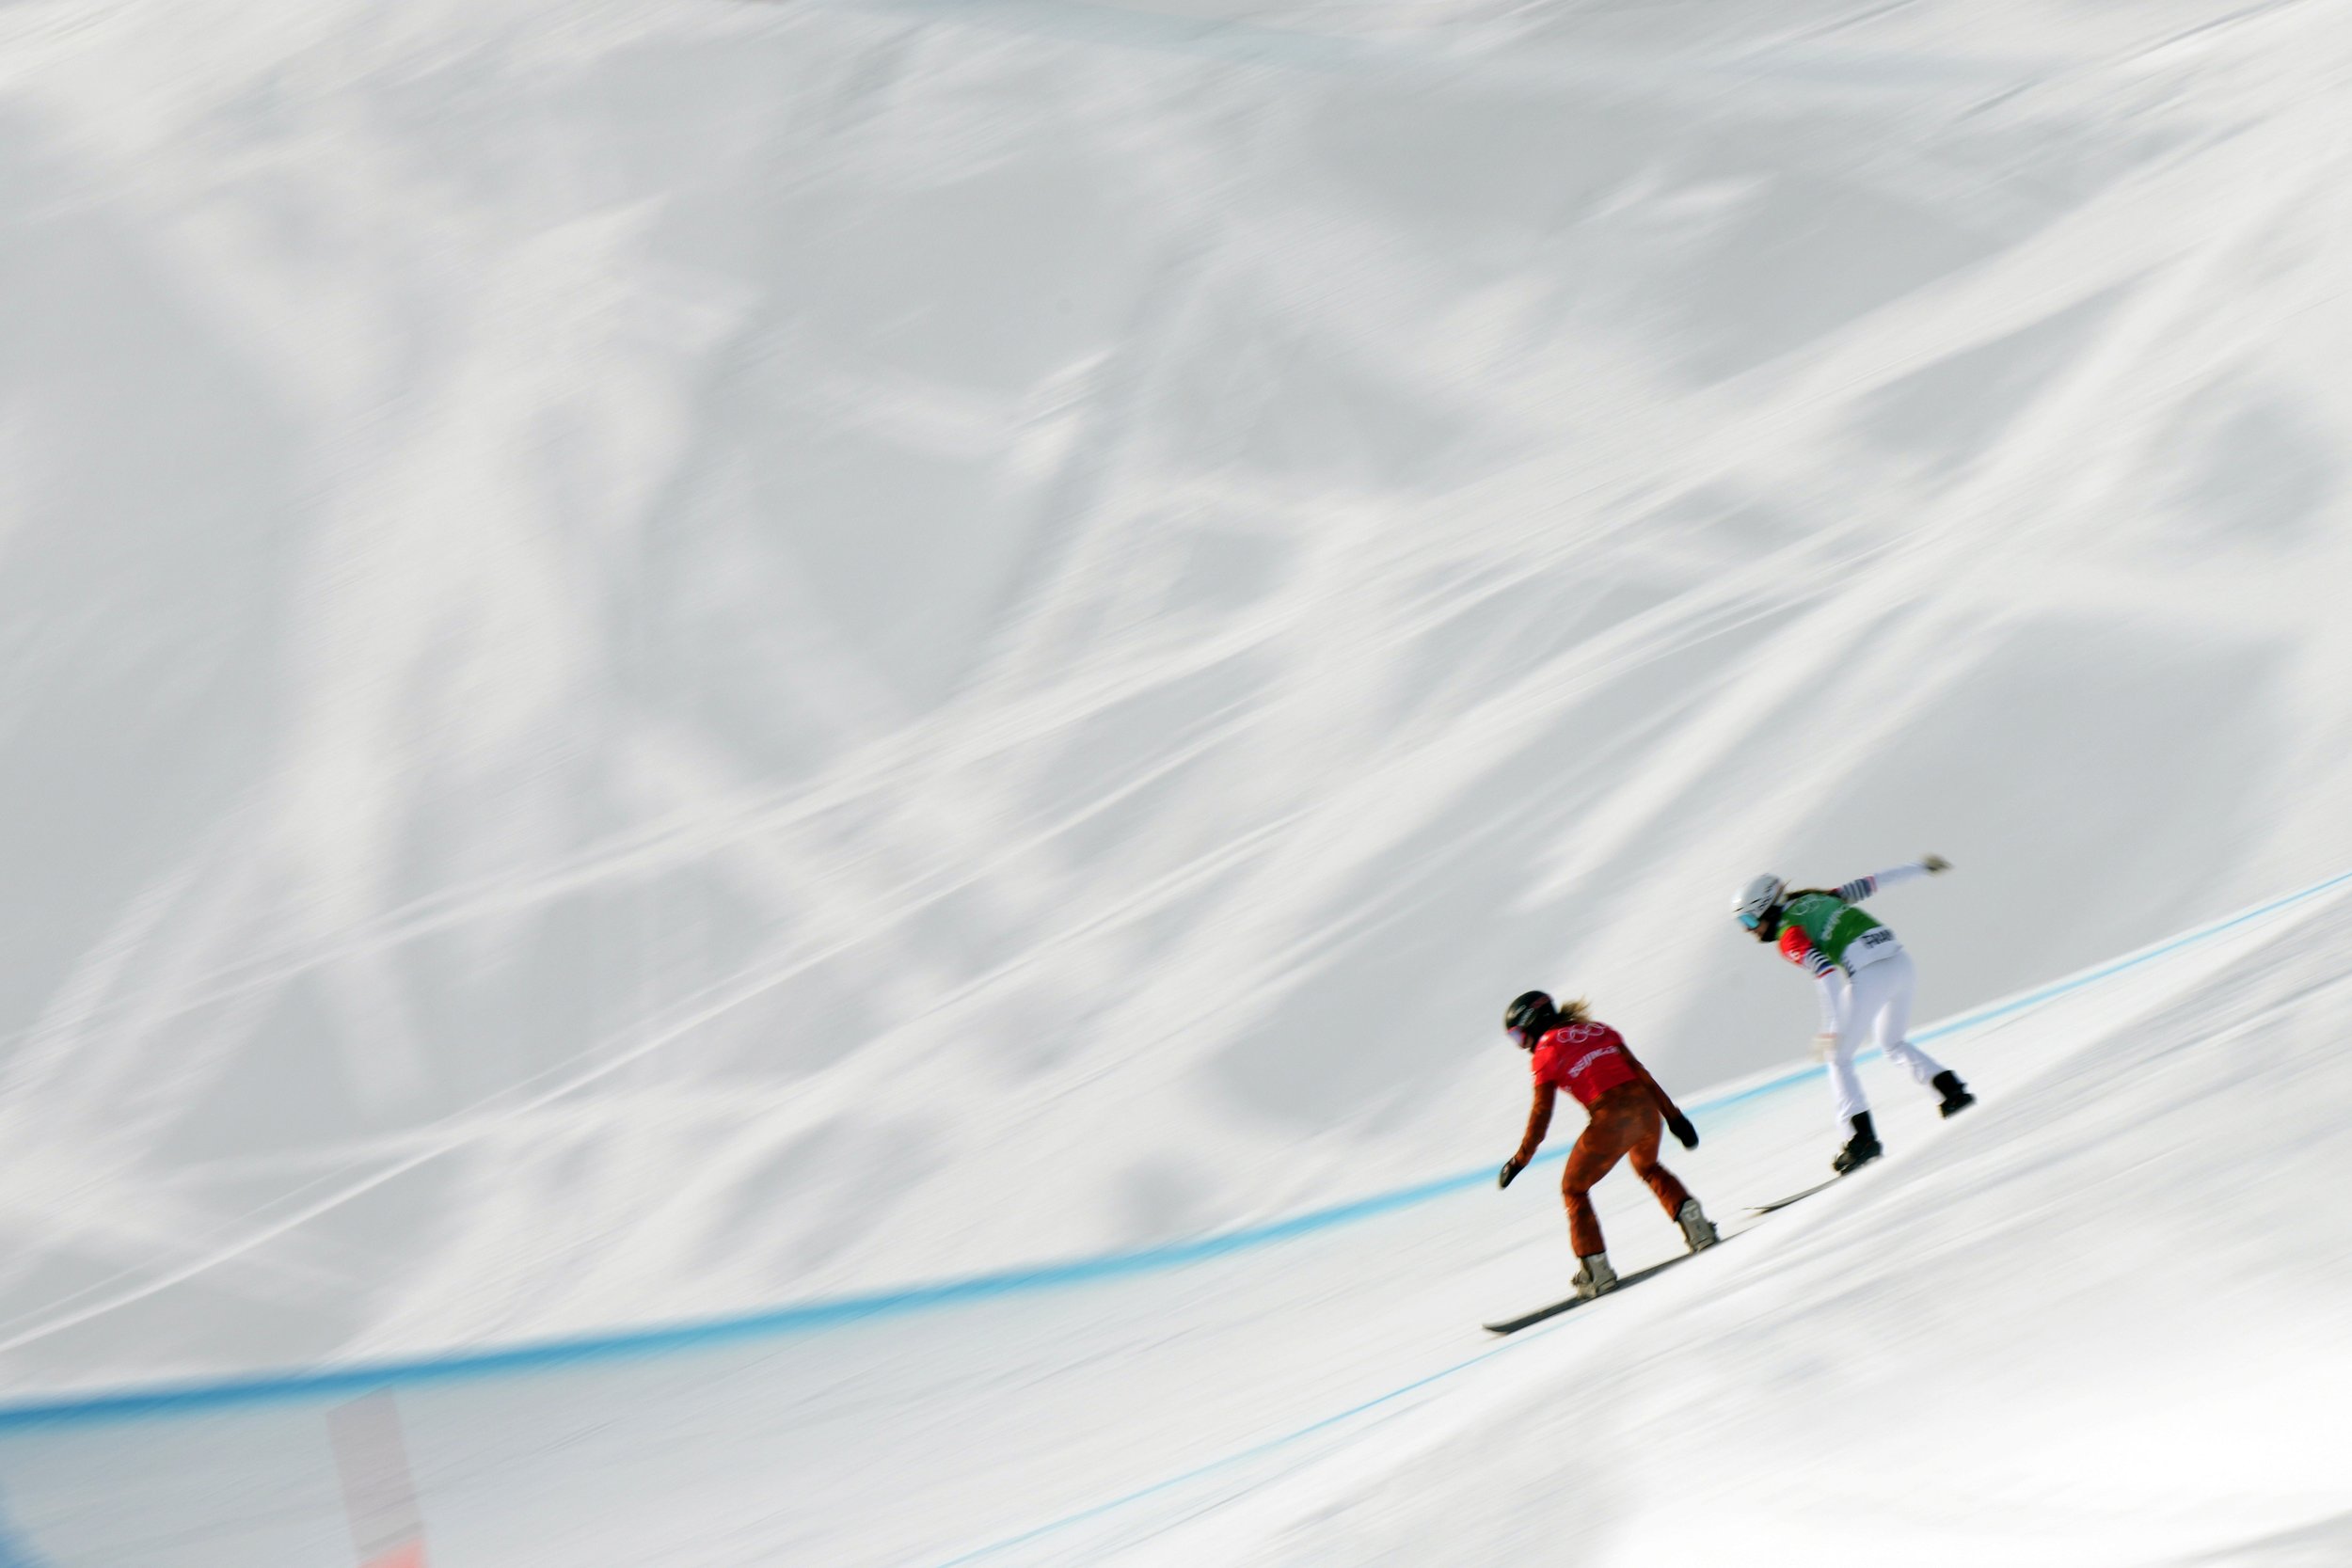  Canada's Meryeta O'Dine, left, and France's Julia Pereira de Sousa Mabileau run the course during the women's snowboard cross finals at the 2022 Winter Olympics, Wednesday, Feb. 9, 2022, in Zhangjiakou, China. (AP Photo/Francisco Seco) 